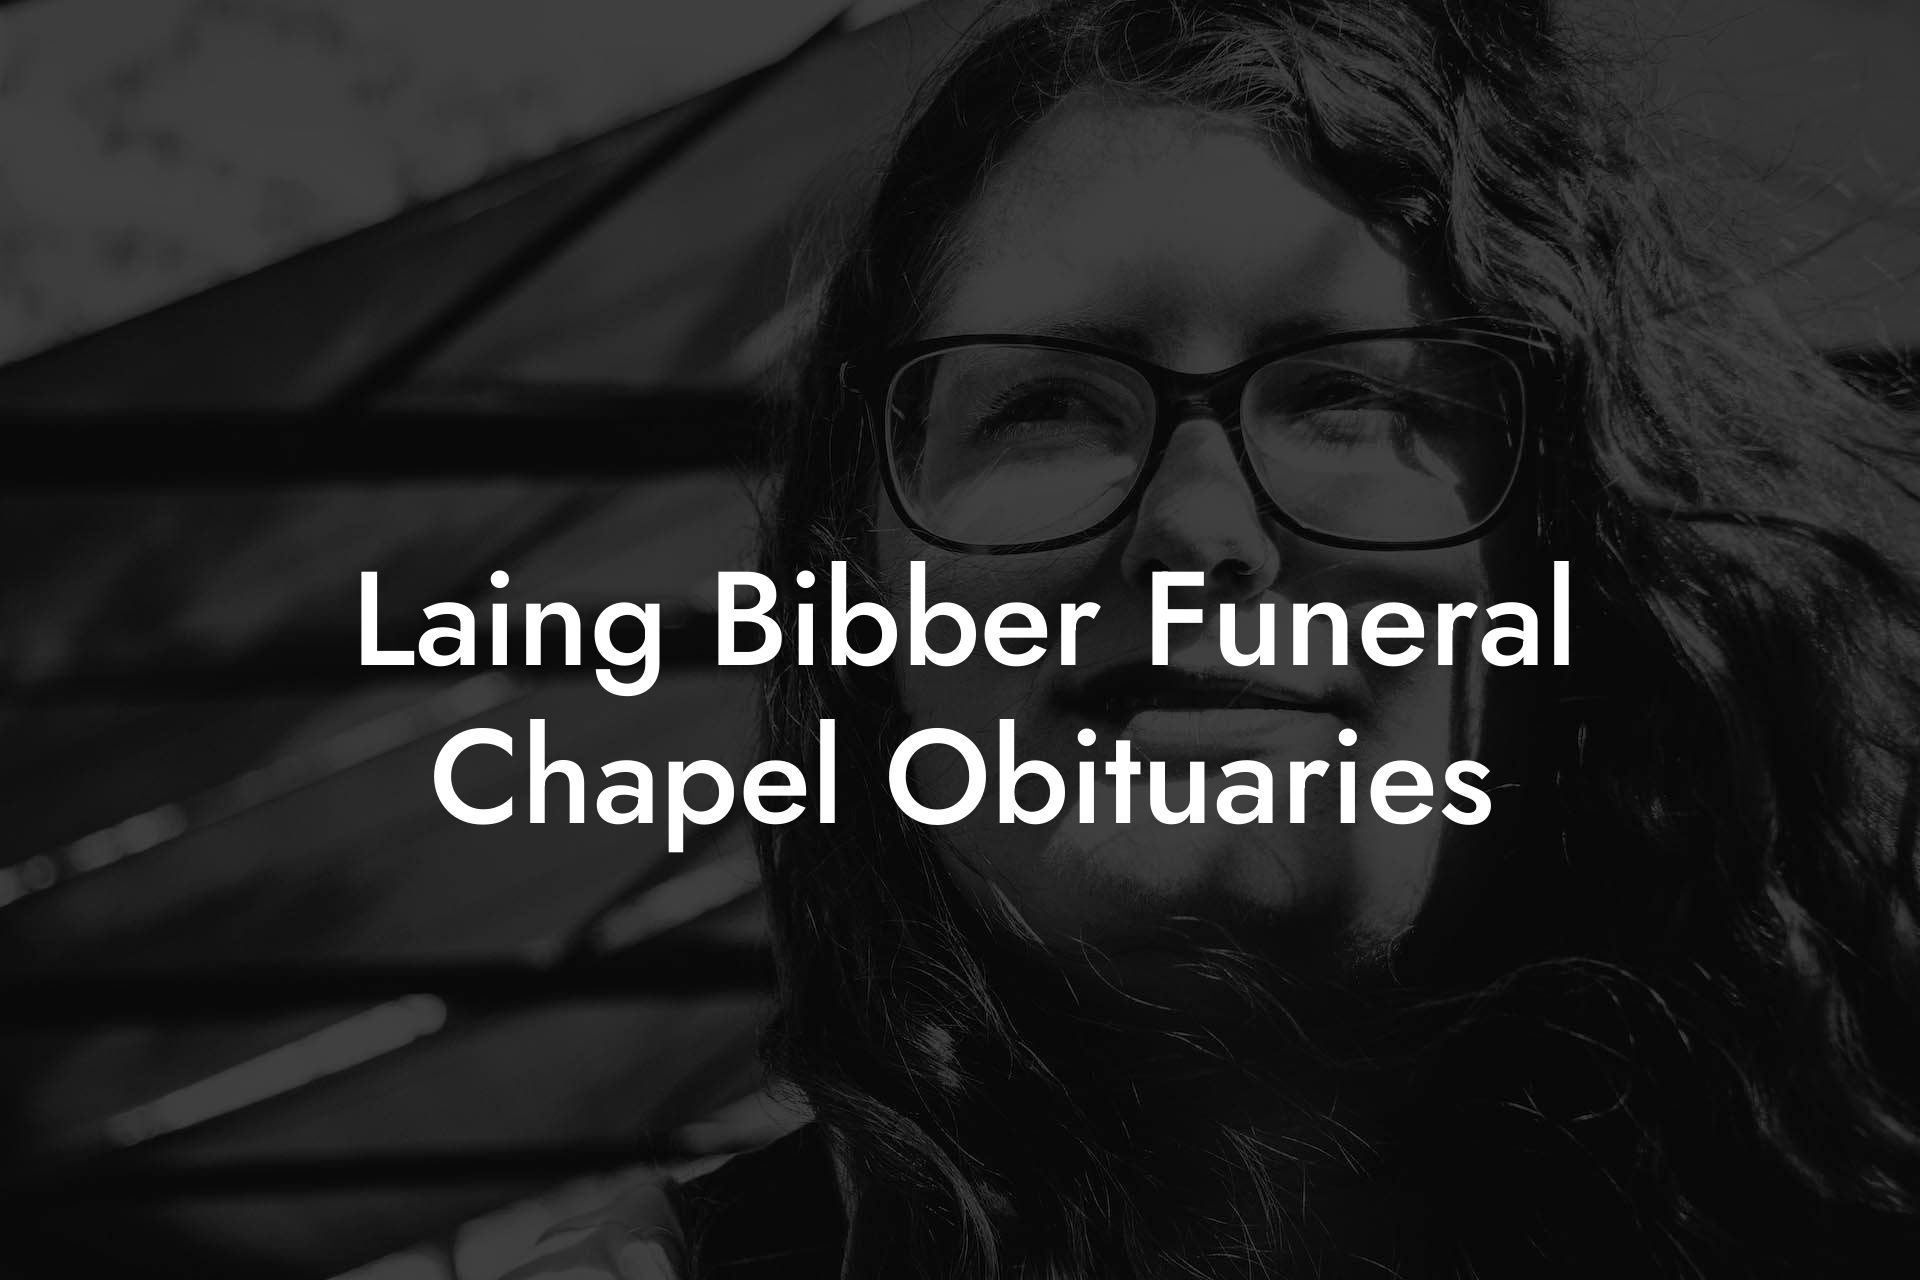 Laing Bibber Funeral Chapel Obituaries